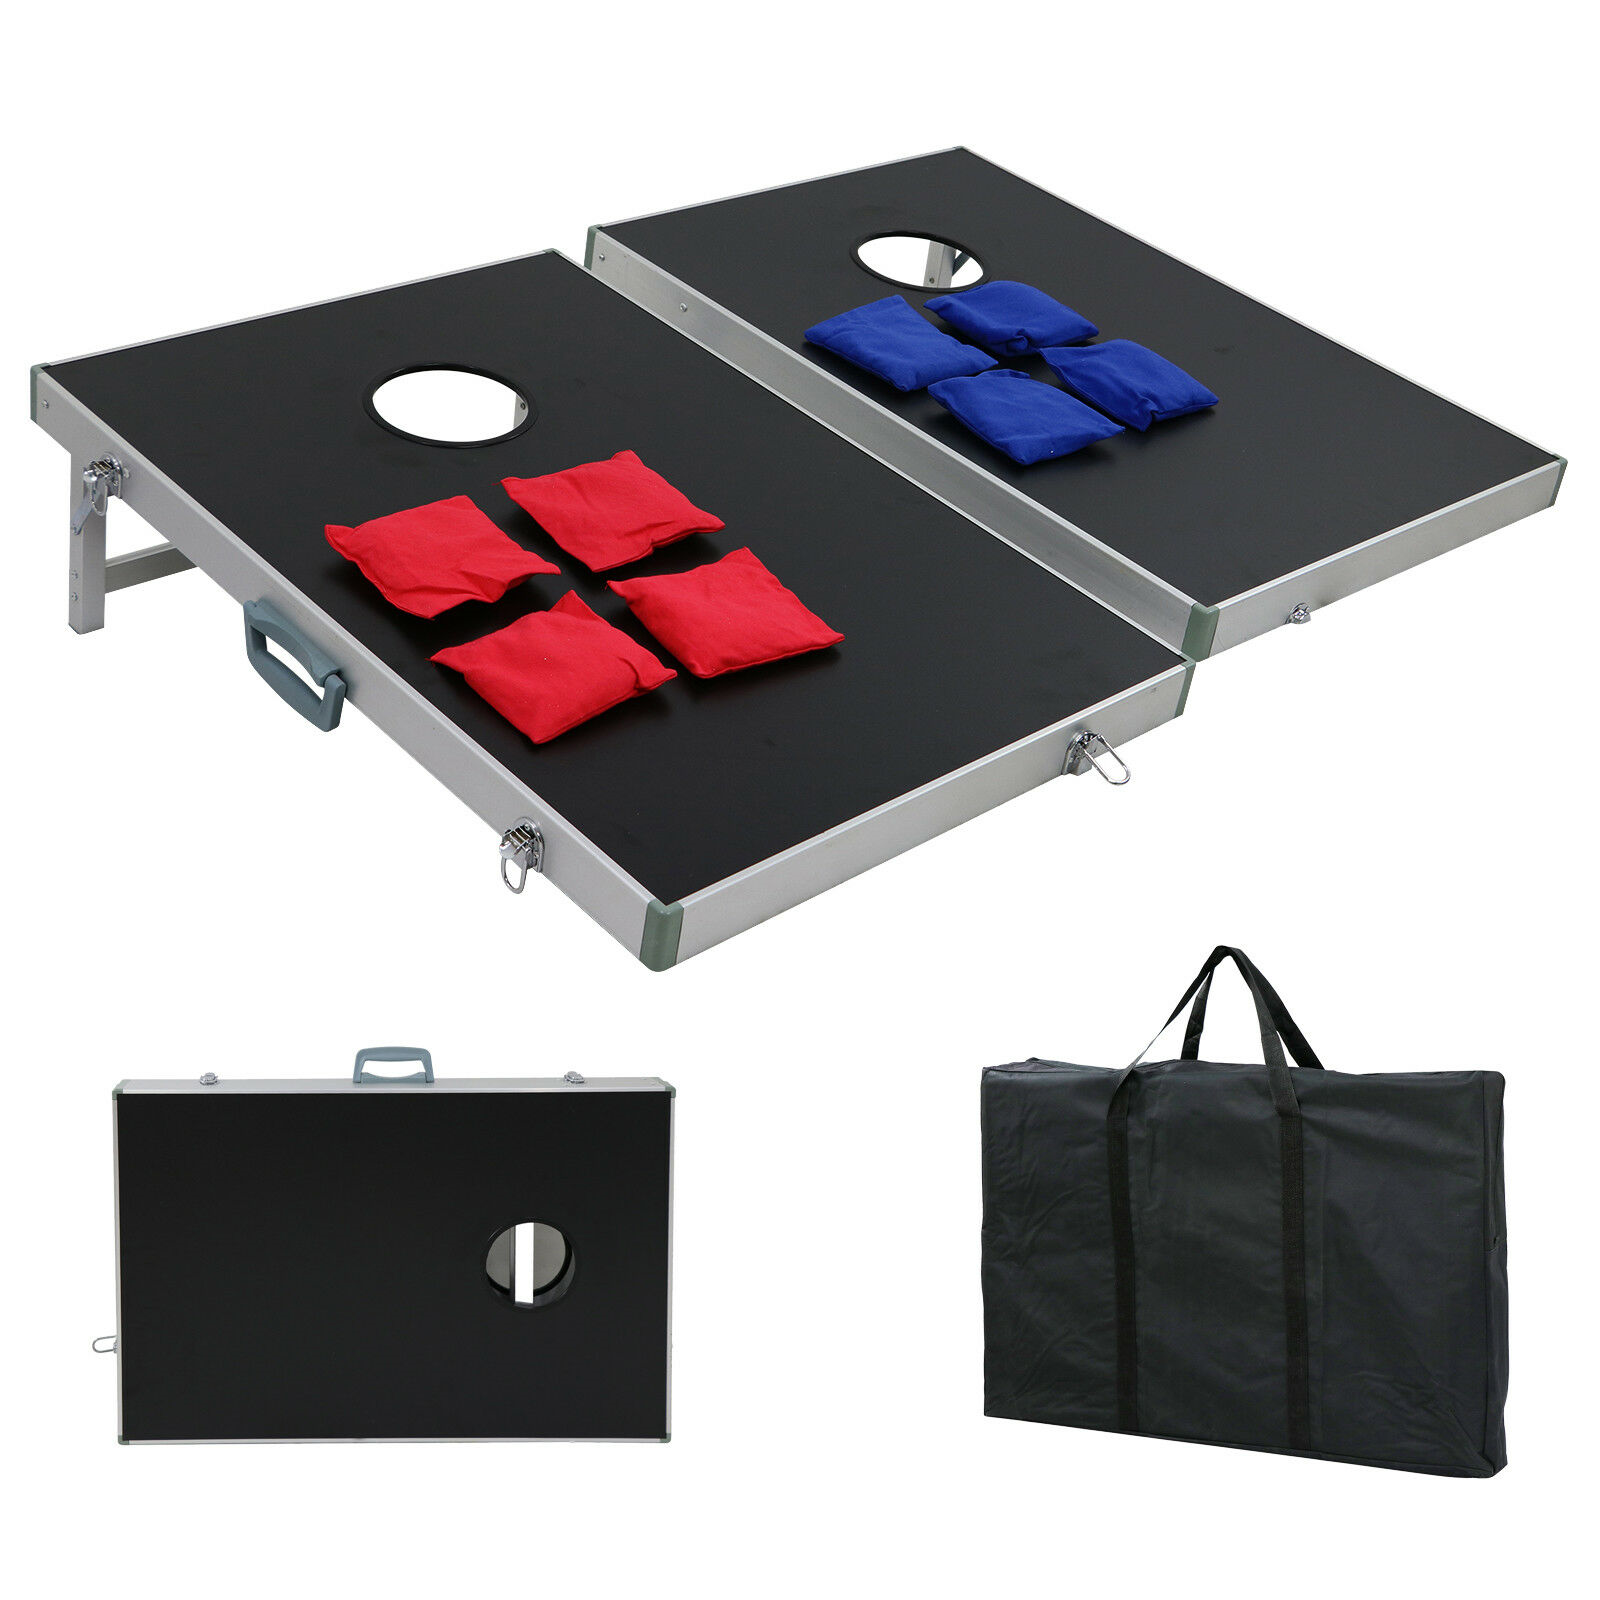 Foldable Cornhole Bean Bag Toss Game Set Regulation Size Aluminum Frame W/8 Bags